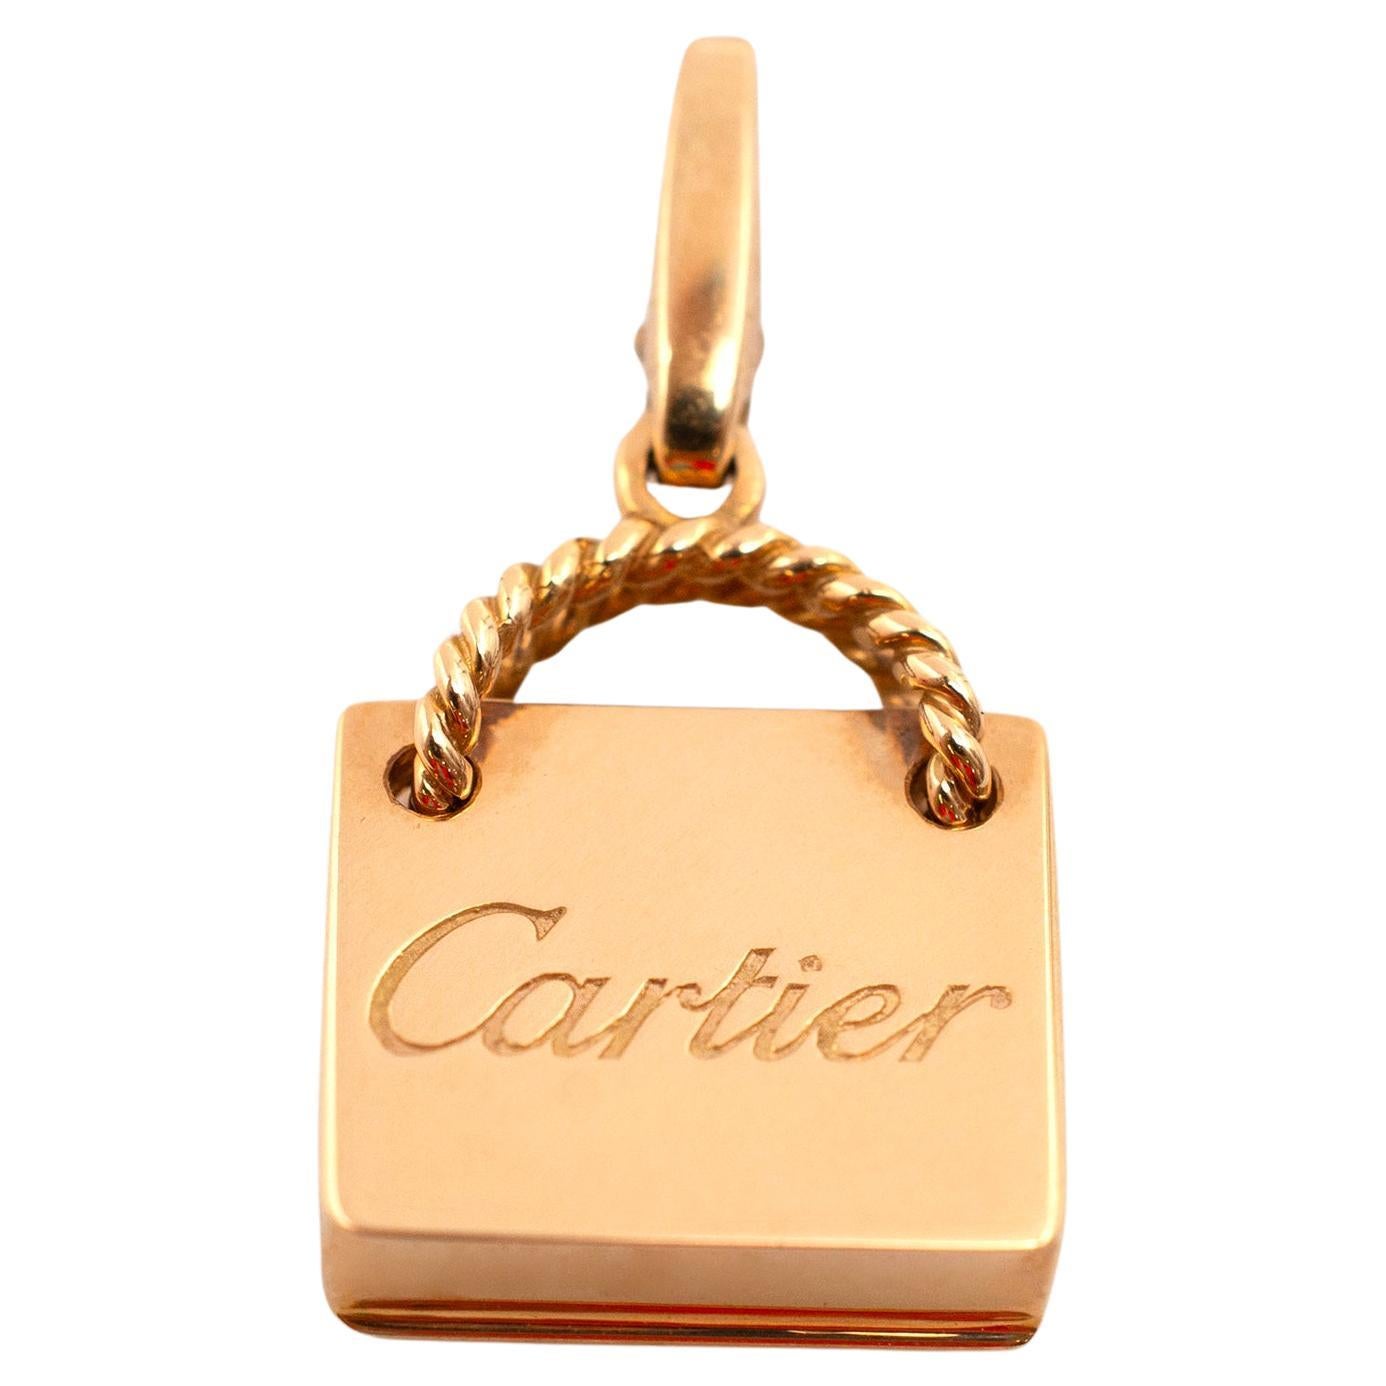 Cartier 18K Rose Gold Shopping Bag Charm